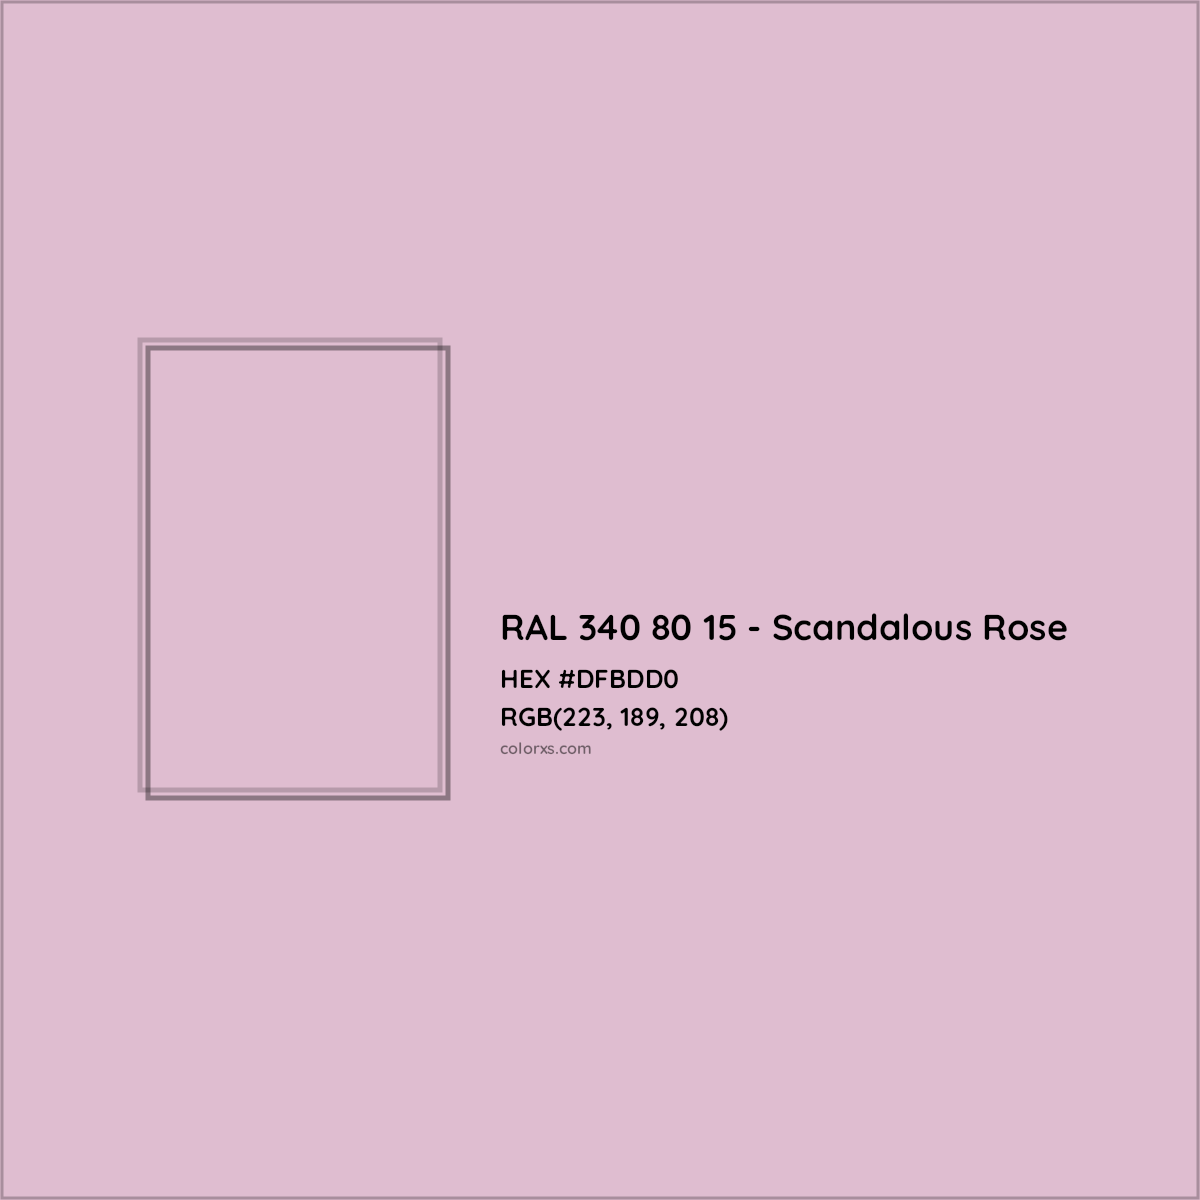 HEX #DFBDD0 RAL 340 80 15 - Scandalous Rose CMS RAL Design - Color Code